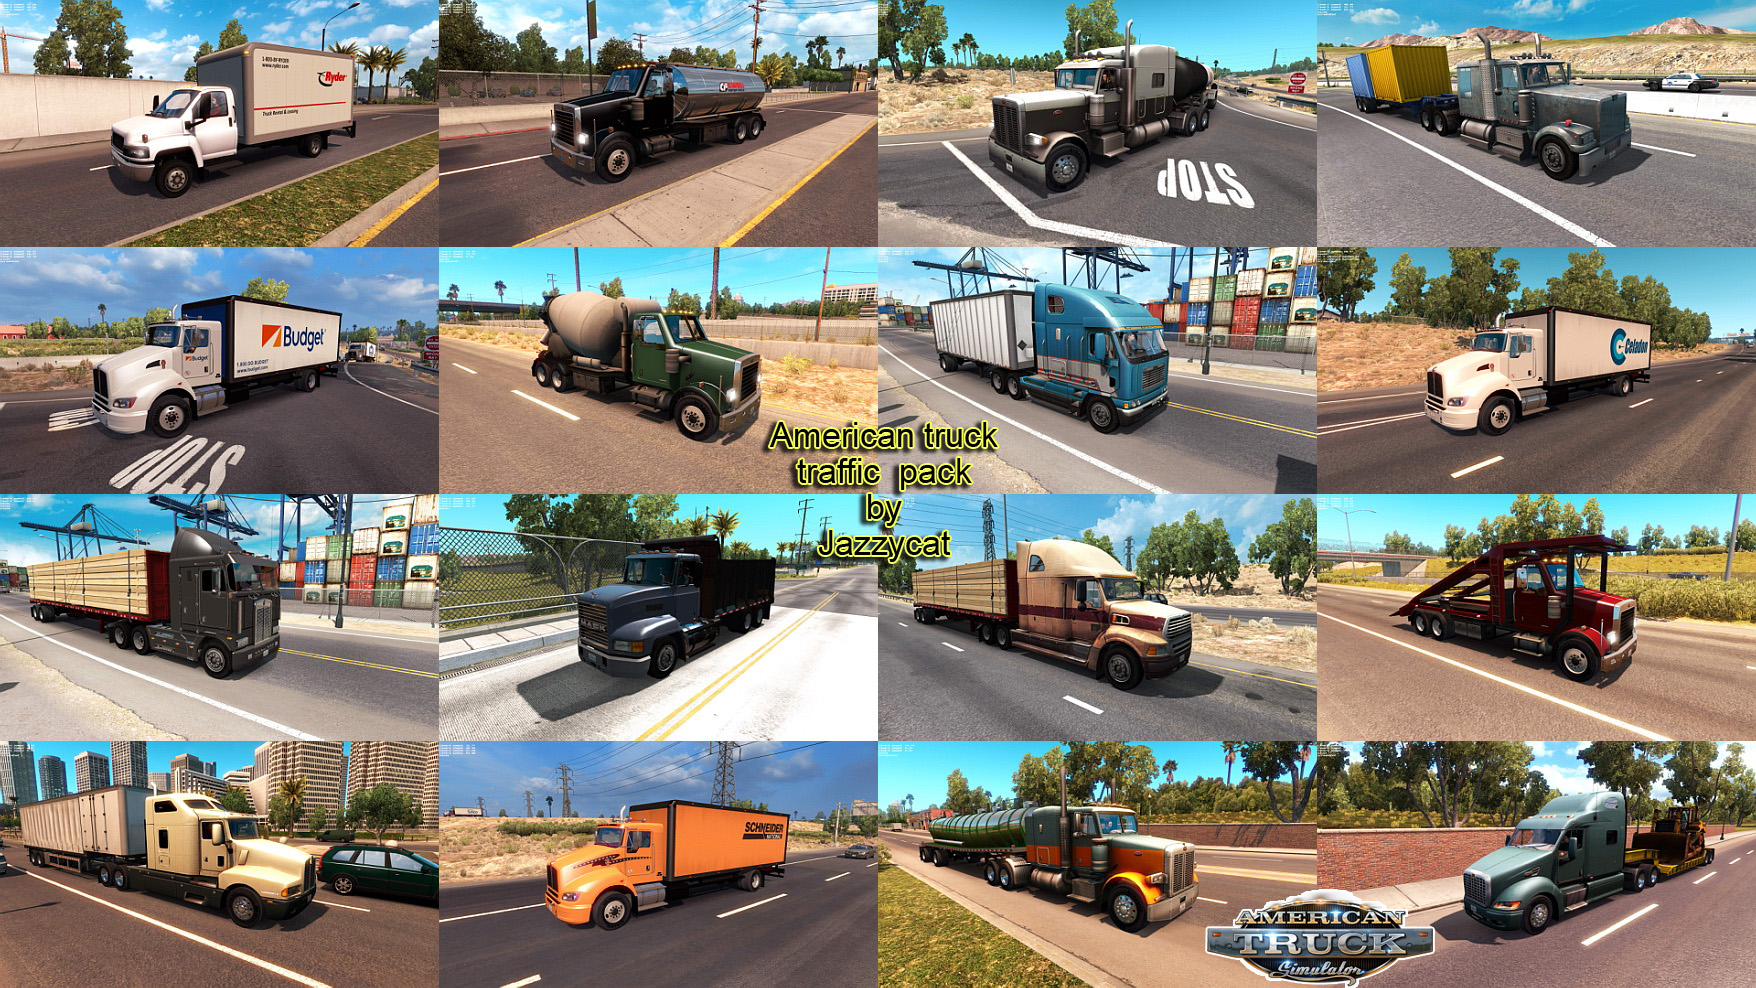 02_truck_traffic_pack_by_Jazzycat_v1.3.jpg